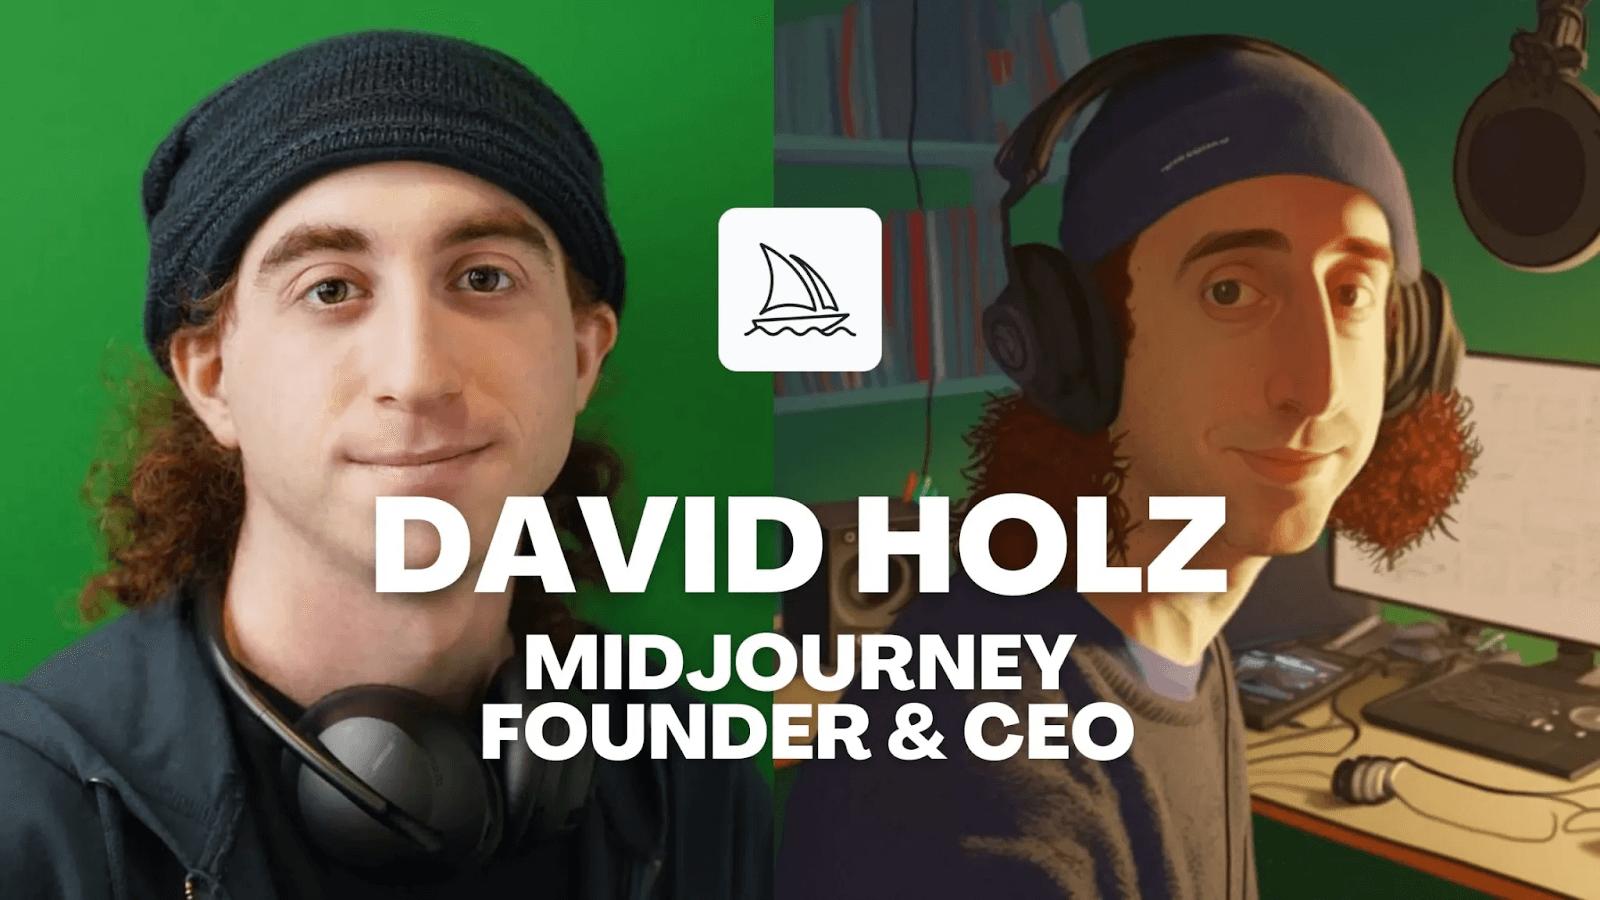 Midjourney Founder David Holz